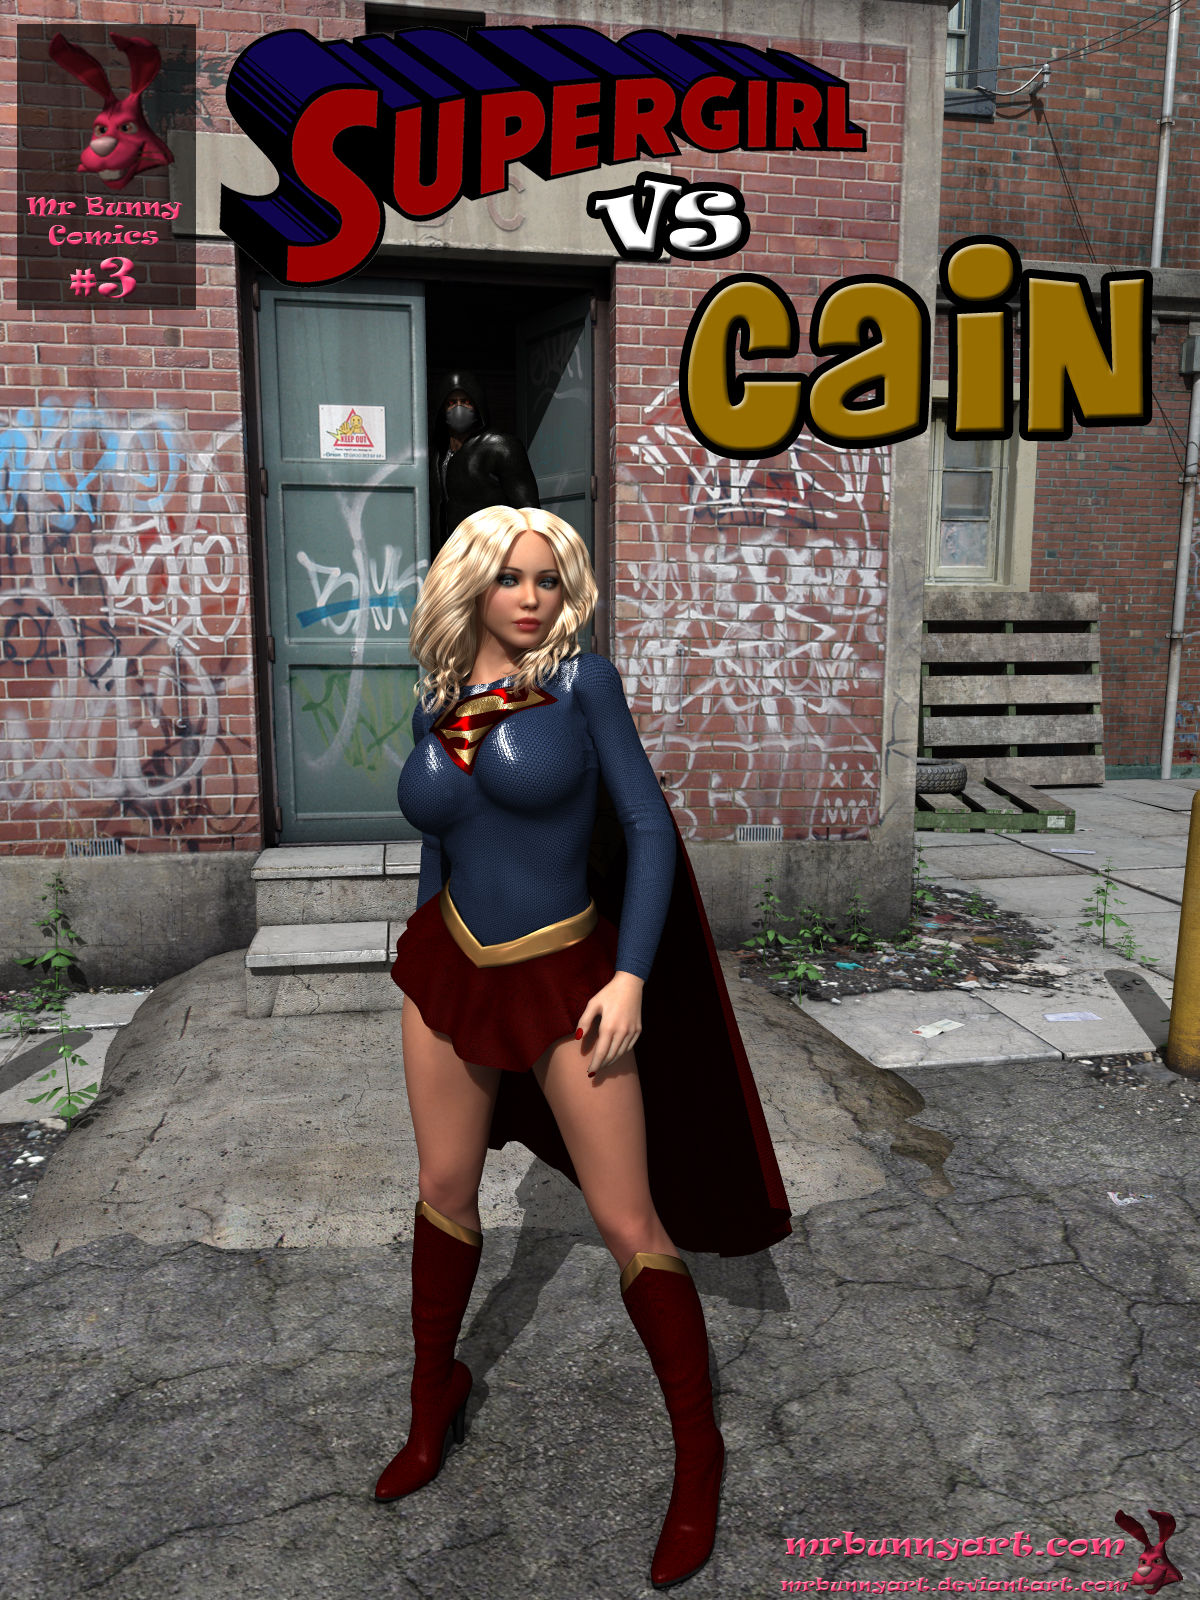 Supergirl Cartoon Bdsm Videos Free - Supergirl vs Cain- MrBunnyArt - Porn Cartoon Comics